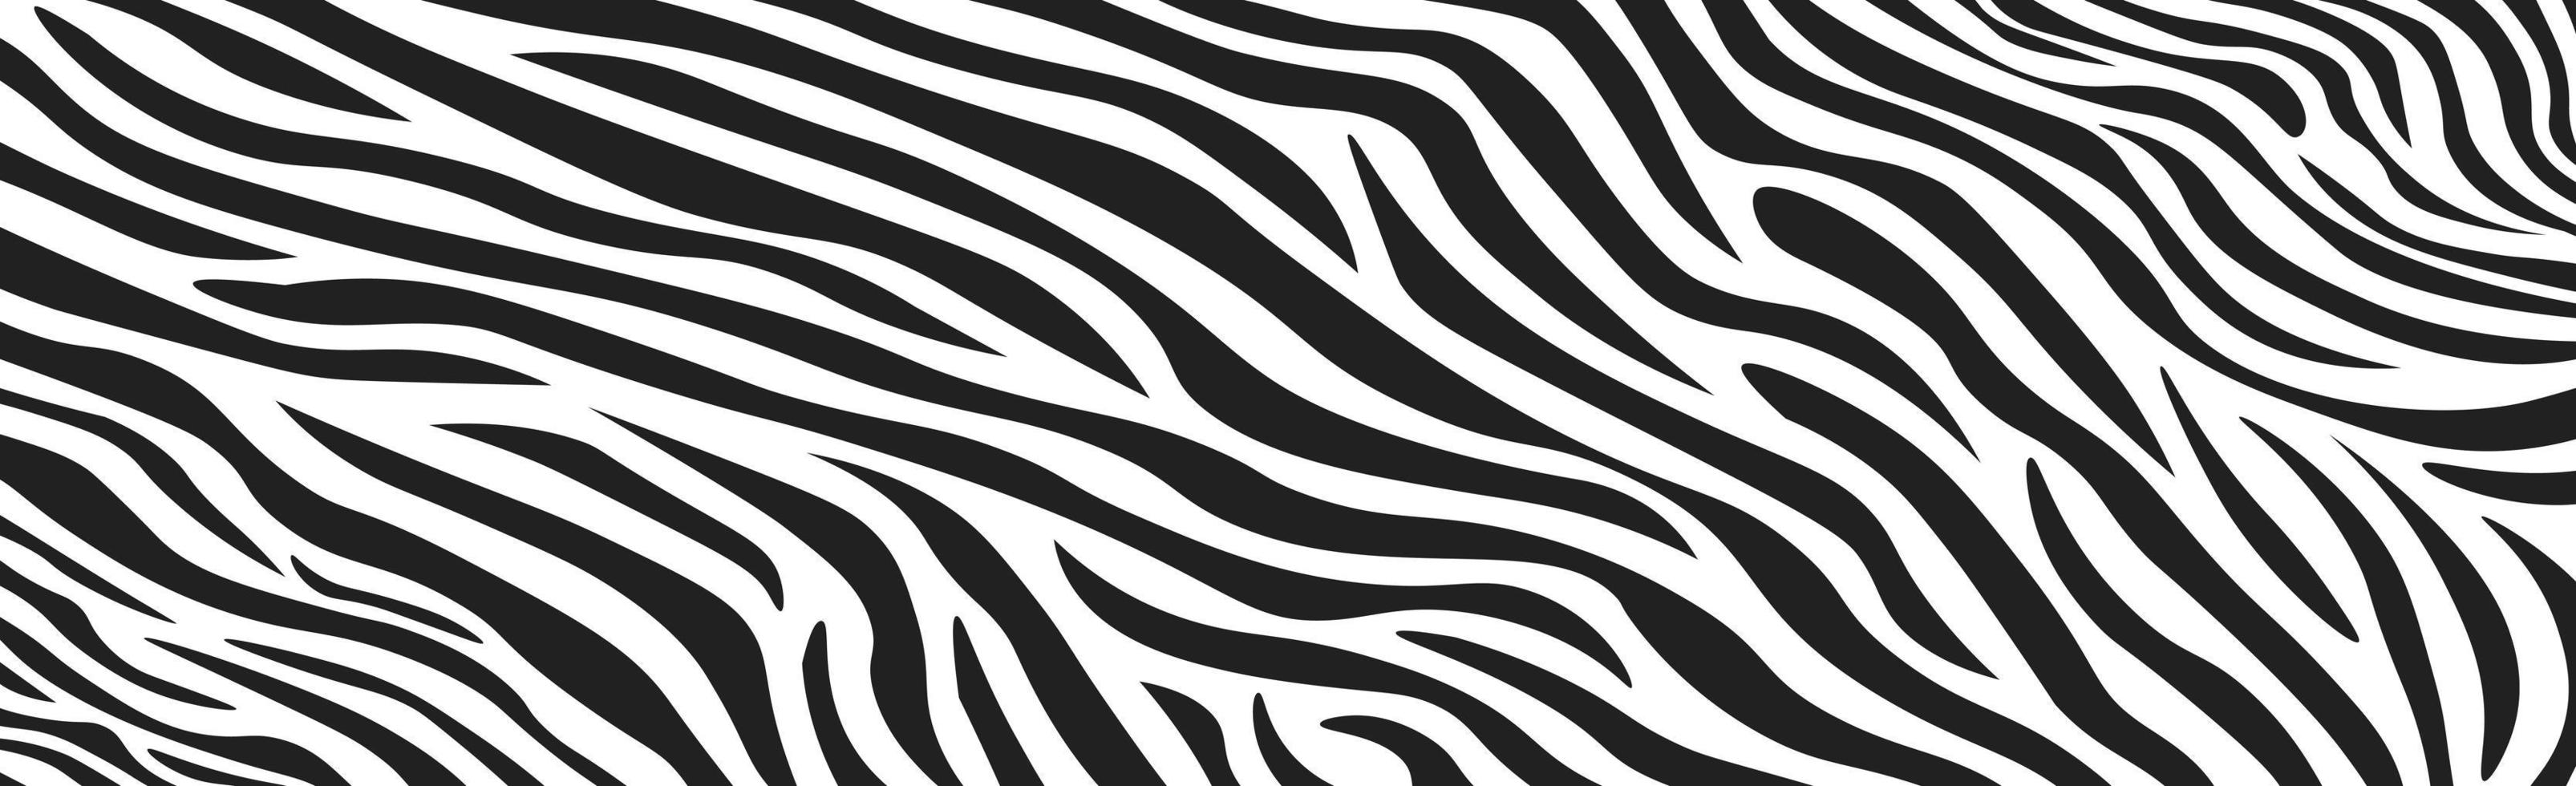 textura de pele de zebra preto e branco ondulada - vetor